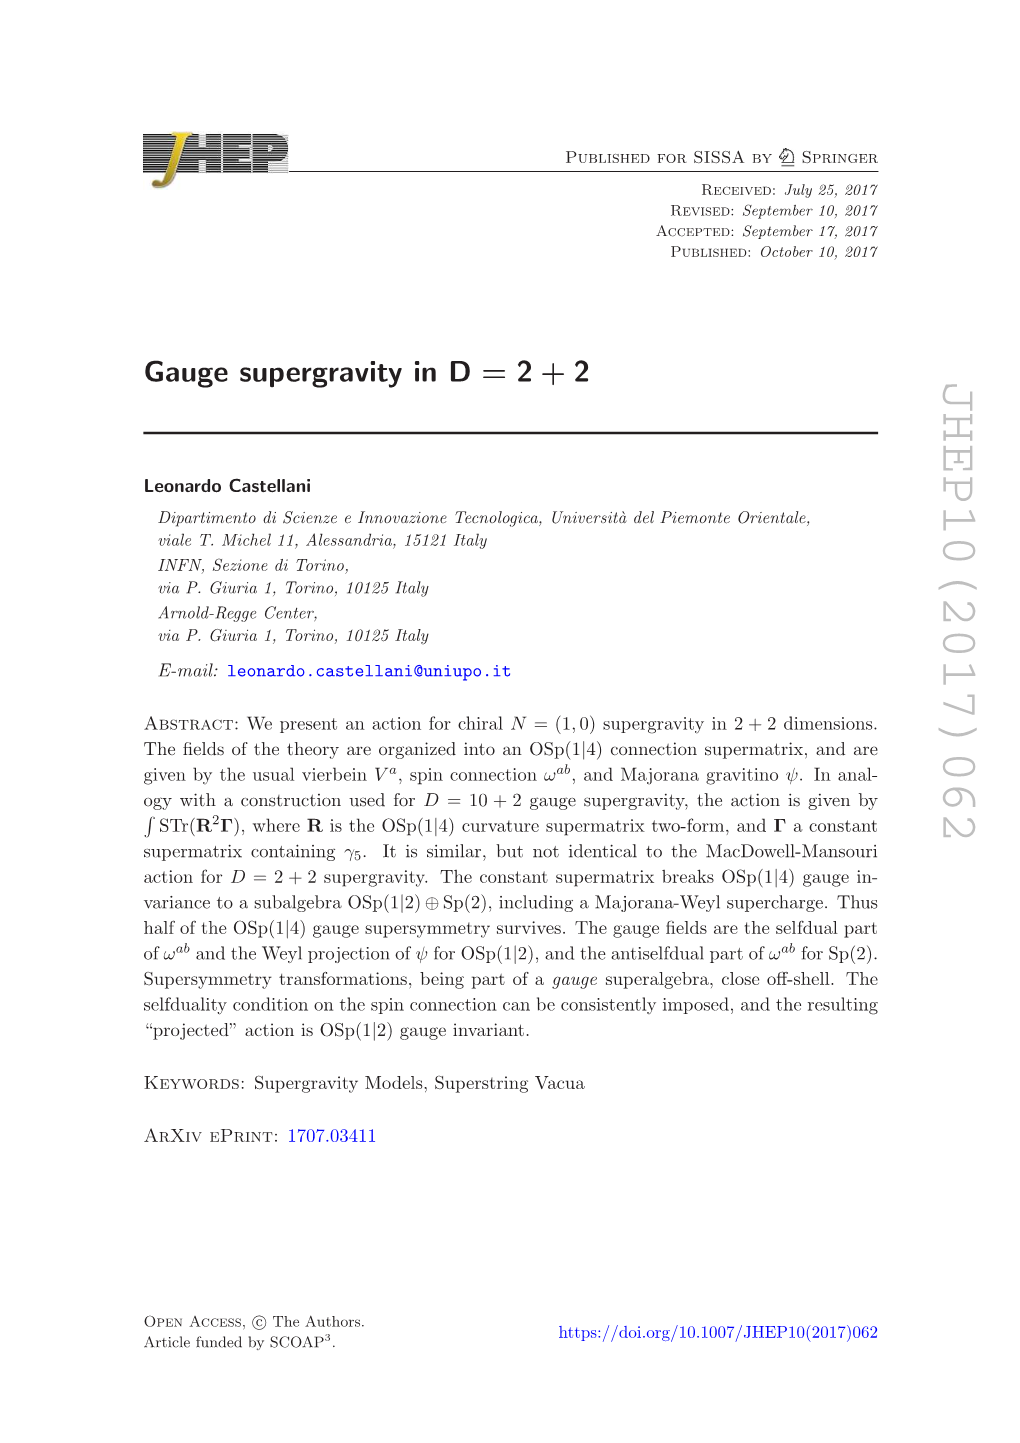 Gauge Supergravity in D= 2+ 2